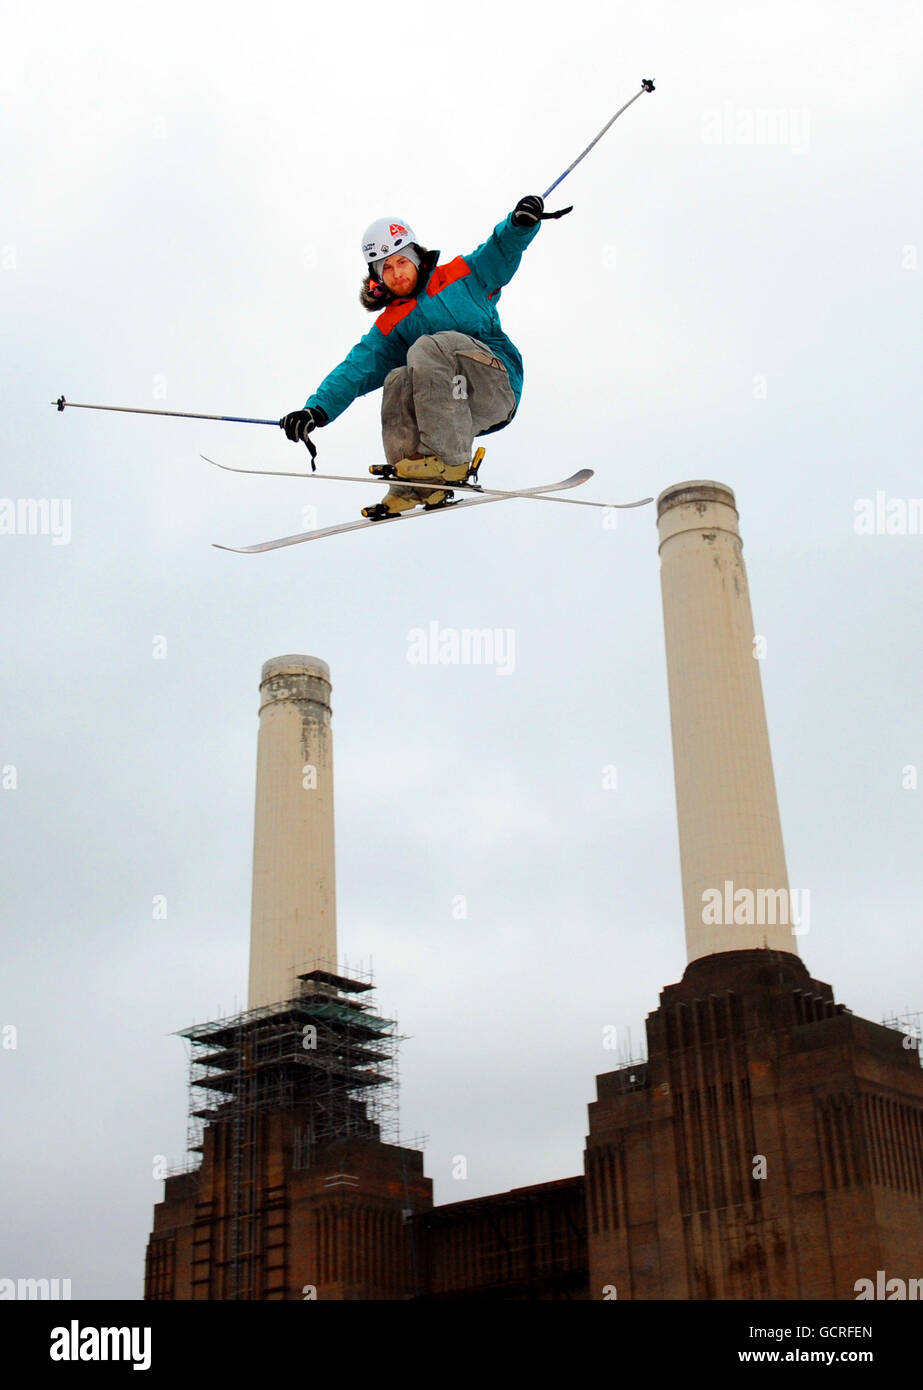 Un esquiador de estilo libre practica en el implacable Freeze Festival, Battersea Power Station, Londres. Foto de stock